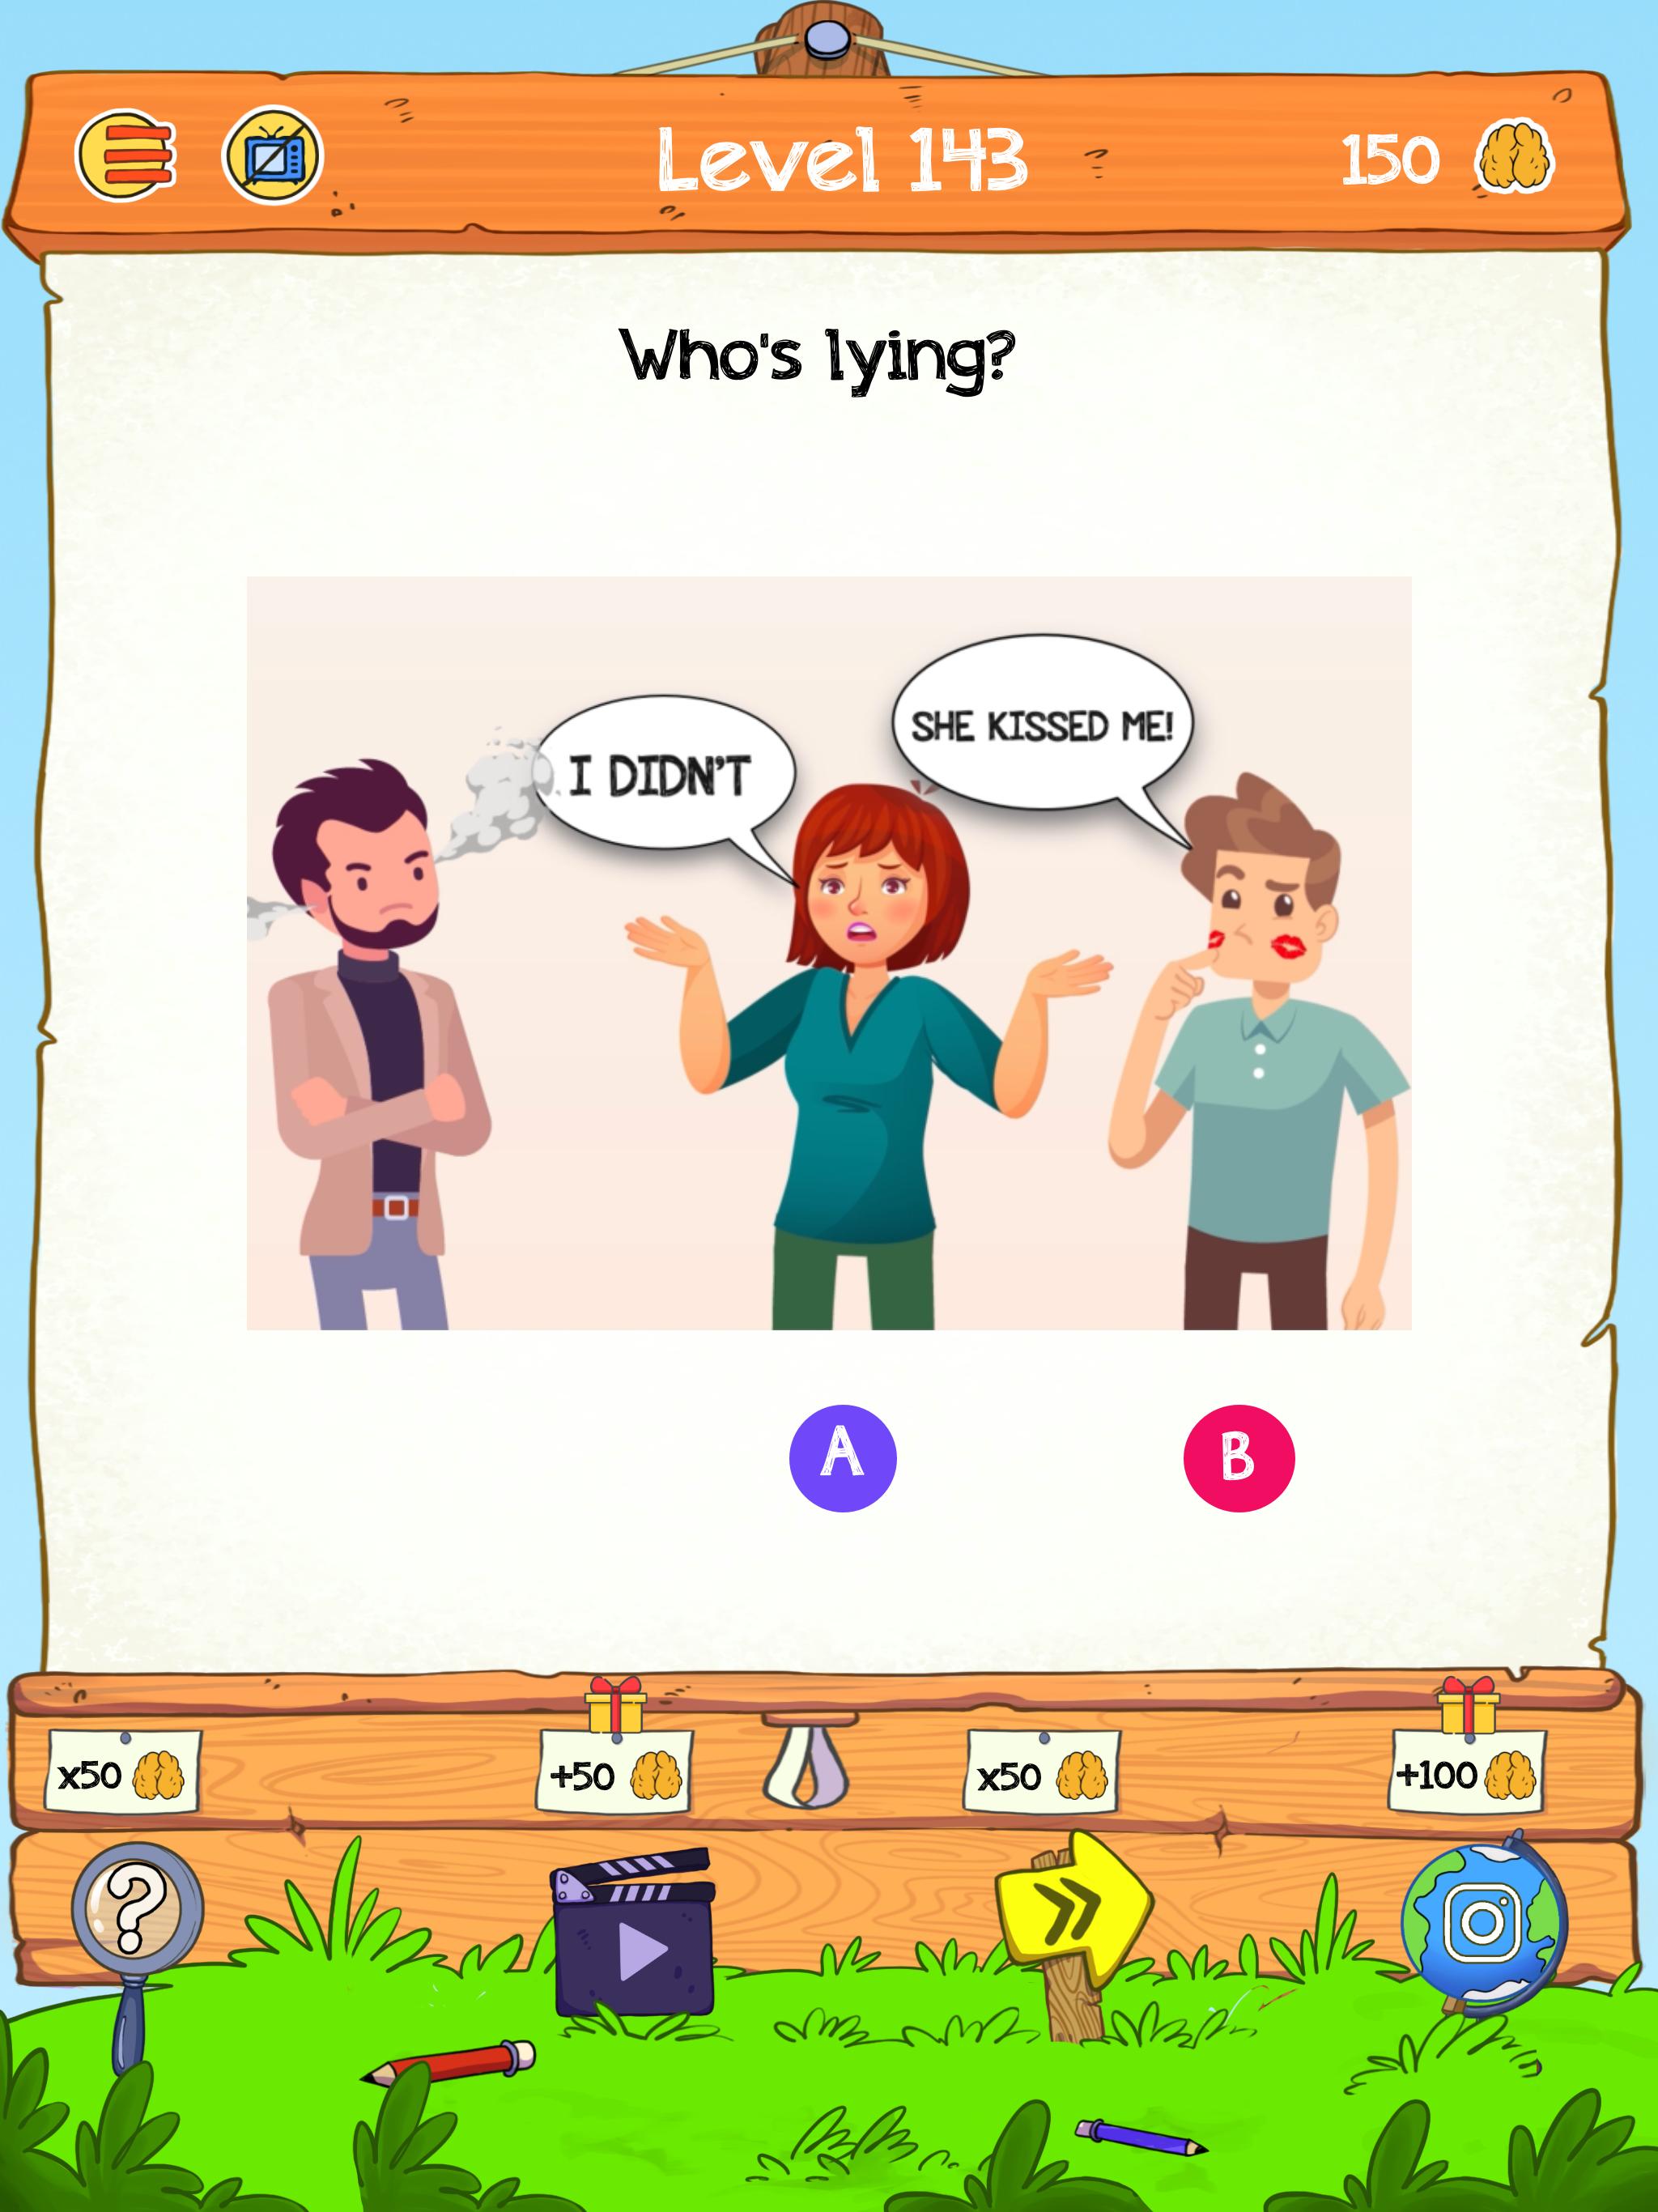 Braindom 2: Who is Lying? Fun Brain Teaser Riddles 1.2.8 Screenshot 11